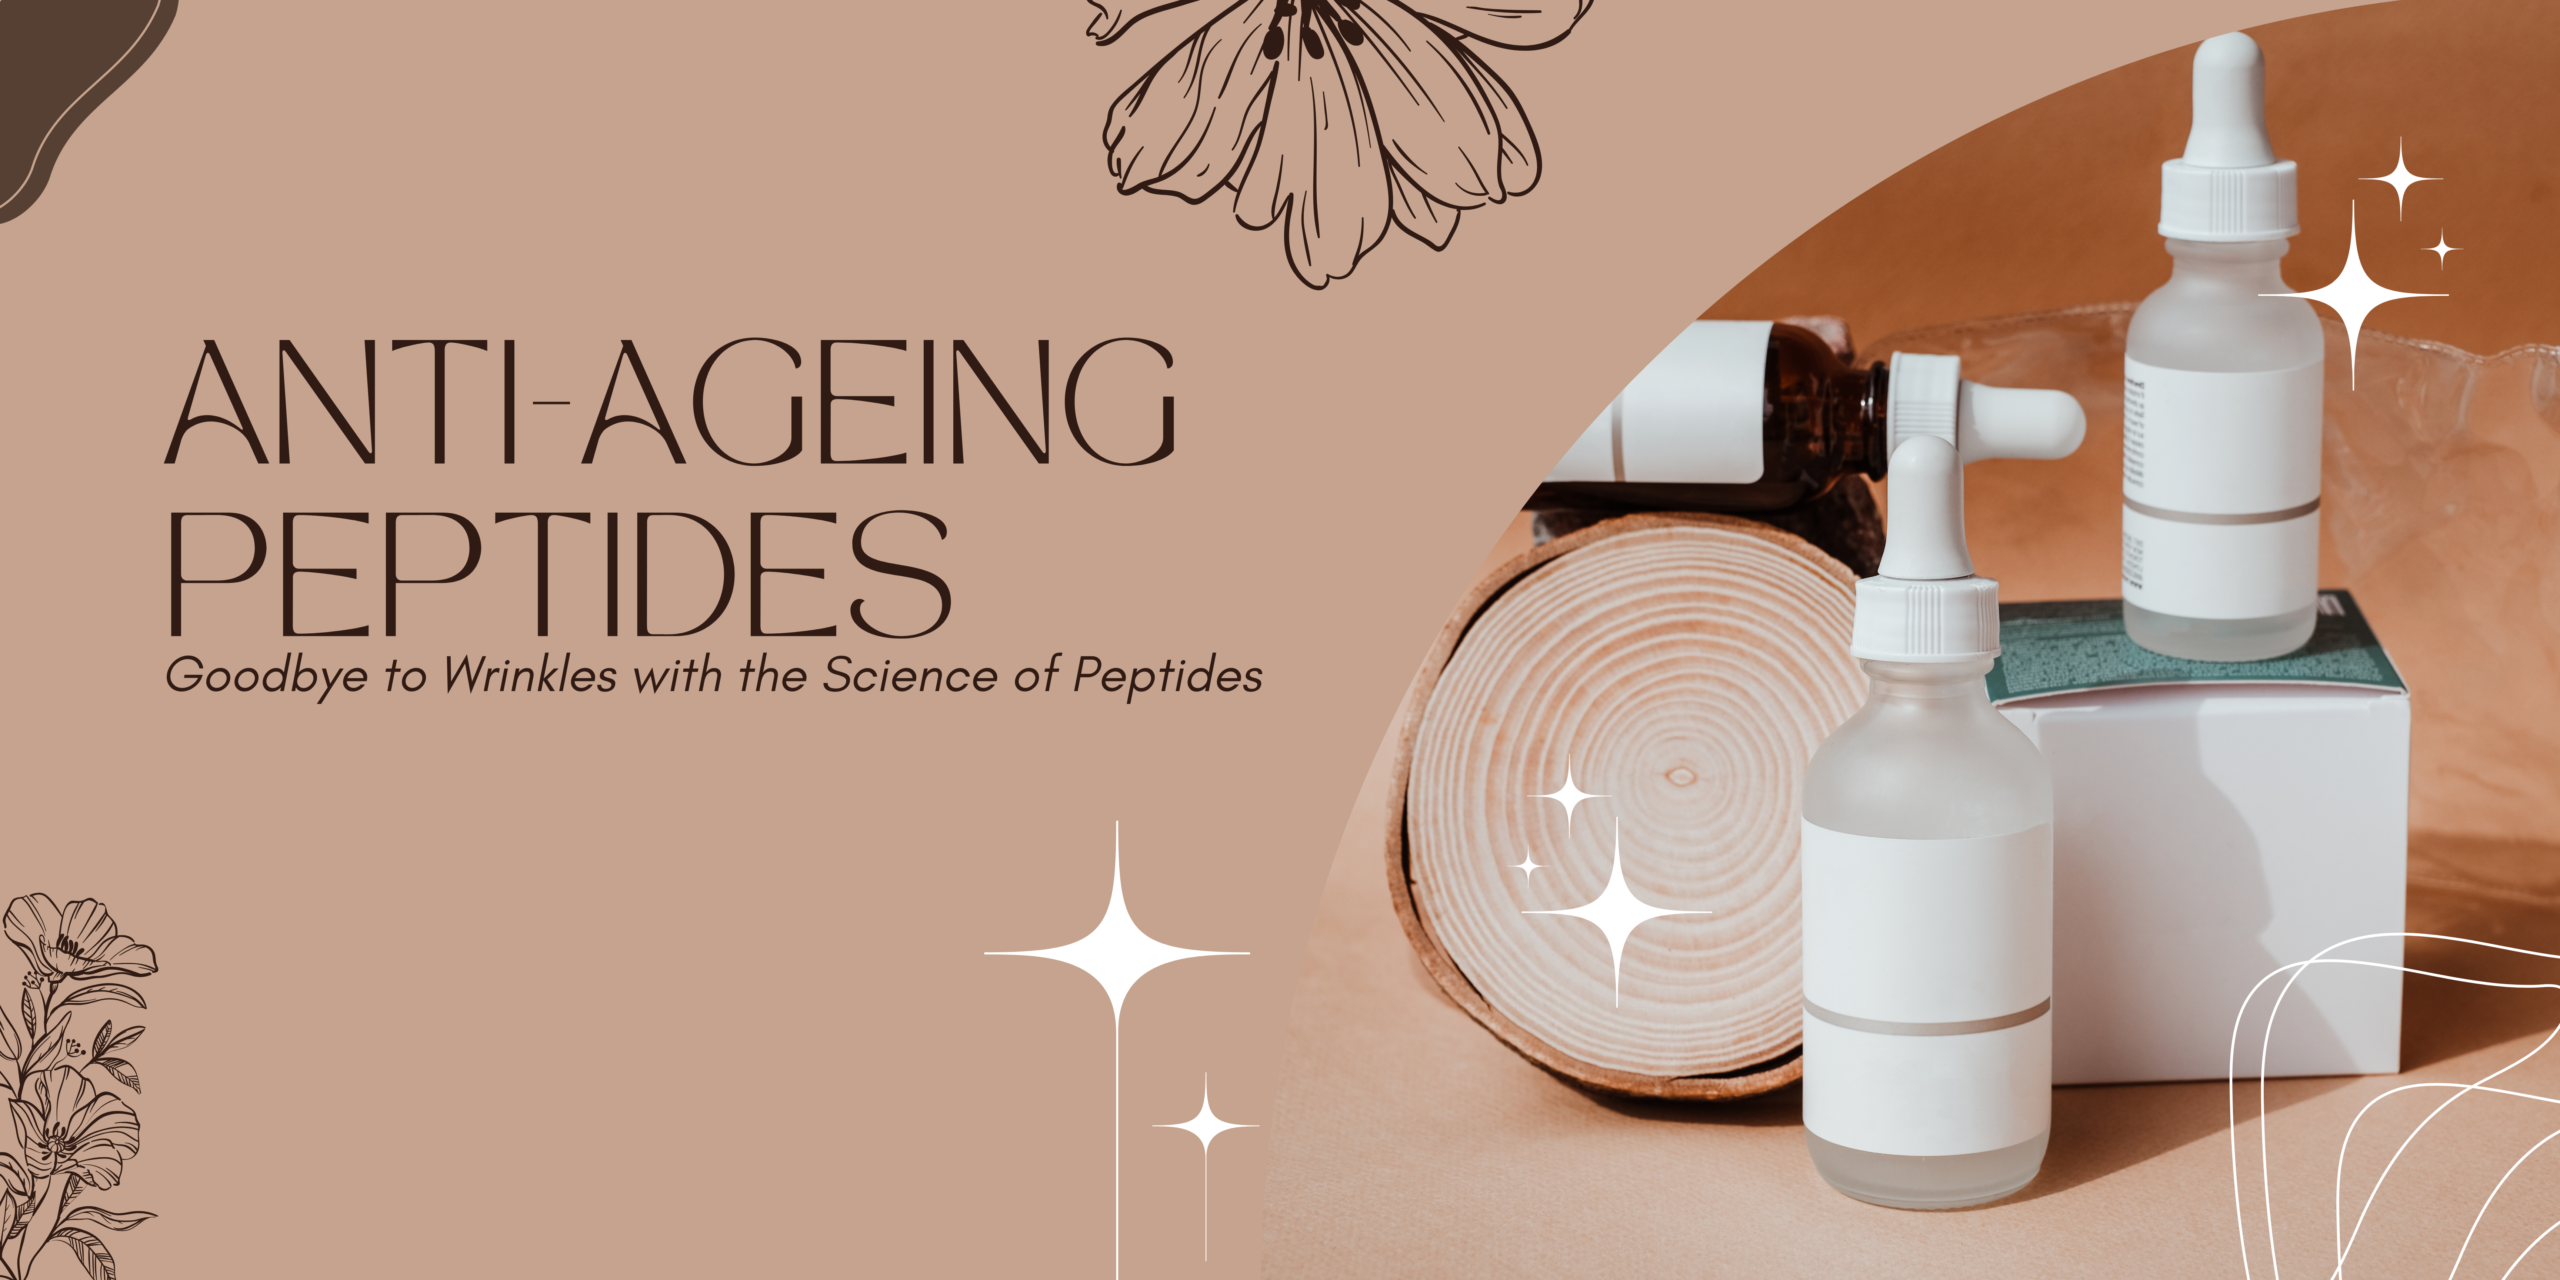 "Anti-Ageing Peptides for Wrinkles: Rejuvenate Your Skin"